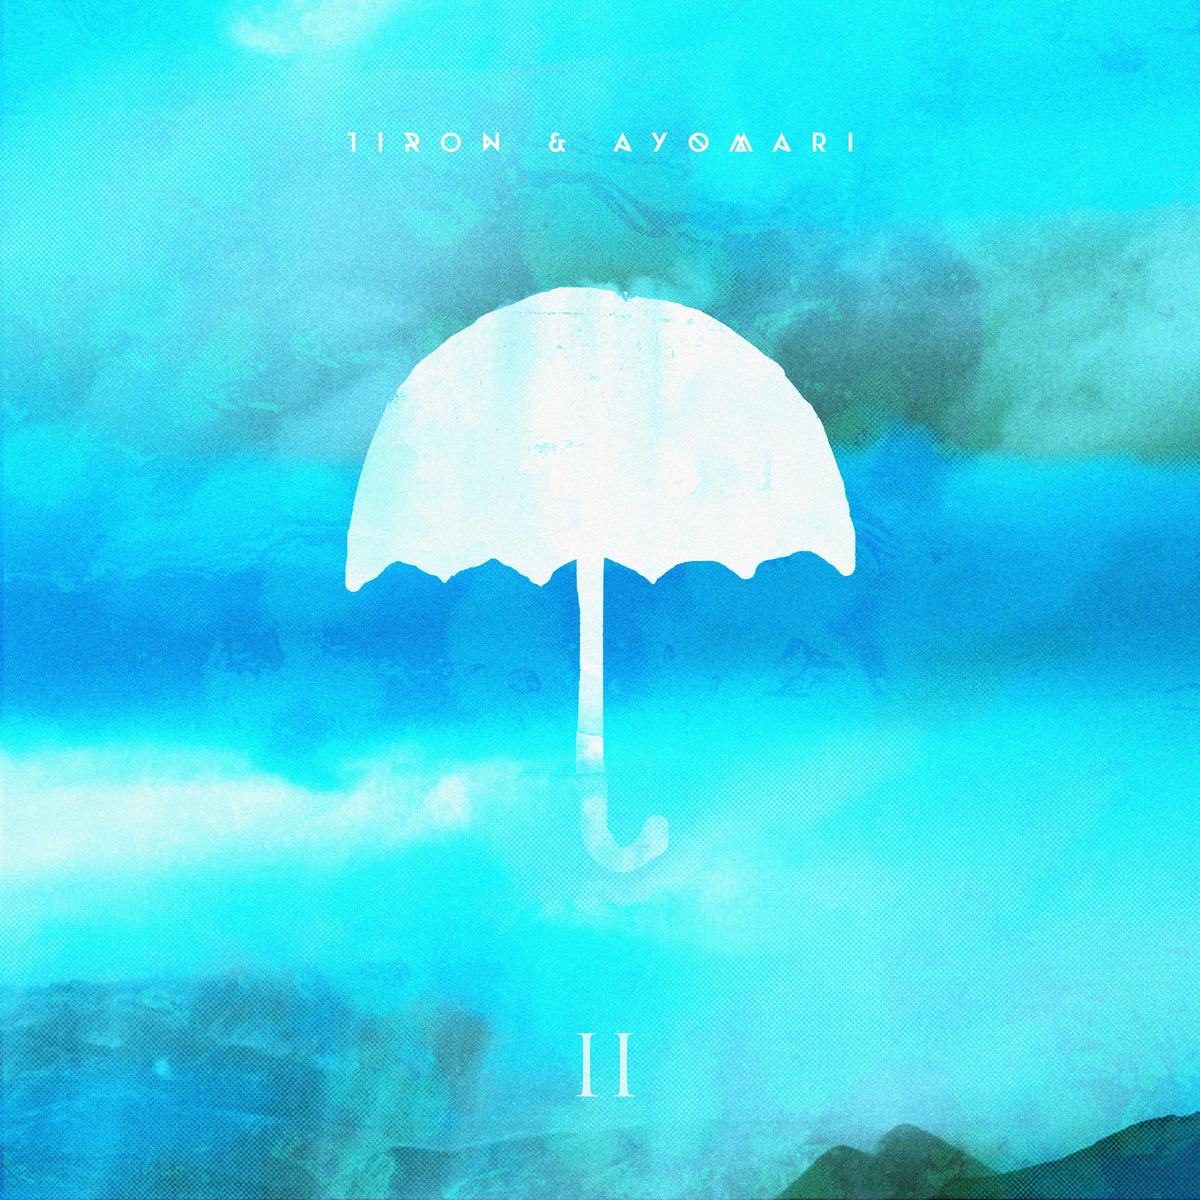 TiRon & Ayomari “The Wonderful Prelude: Part 2″ Release | @TiRon @Ayomari